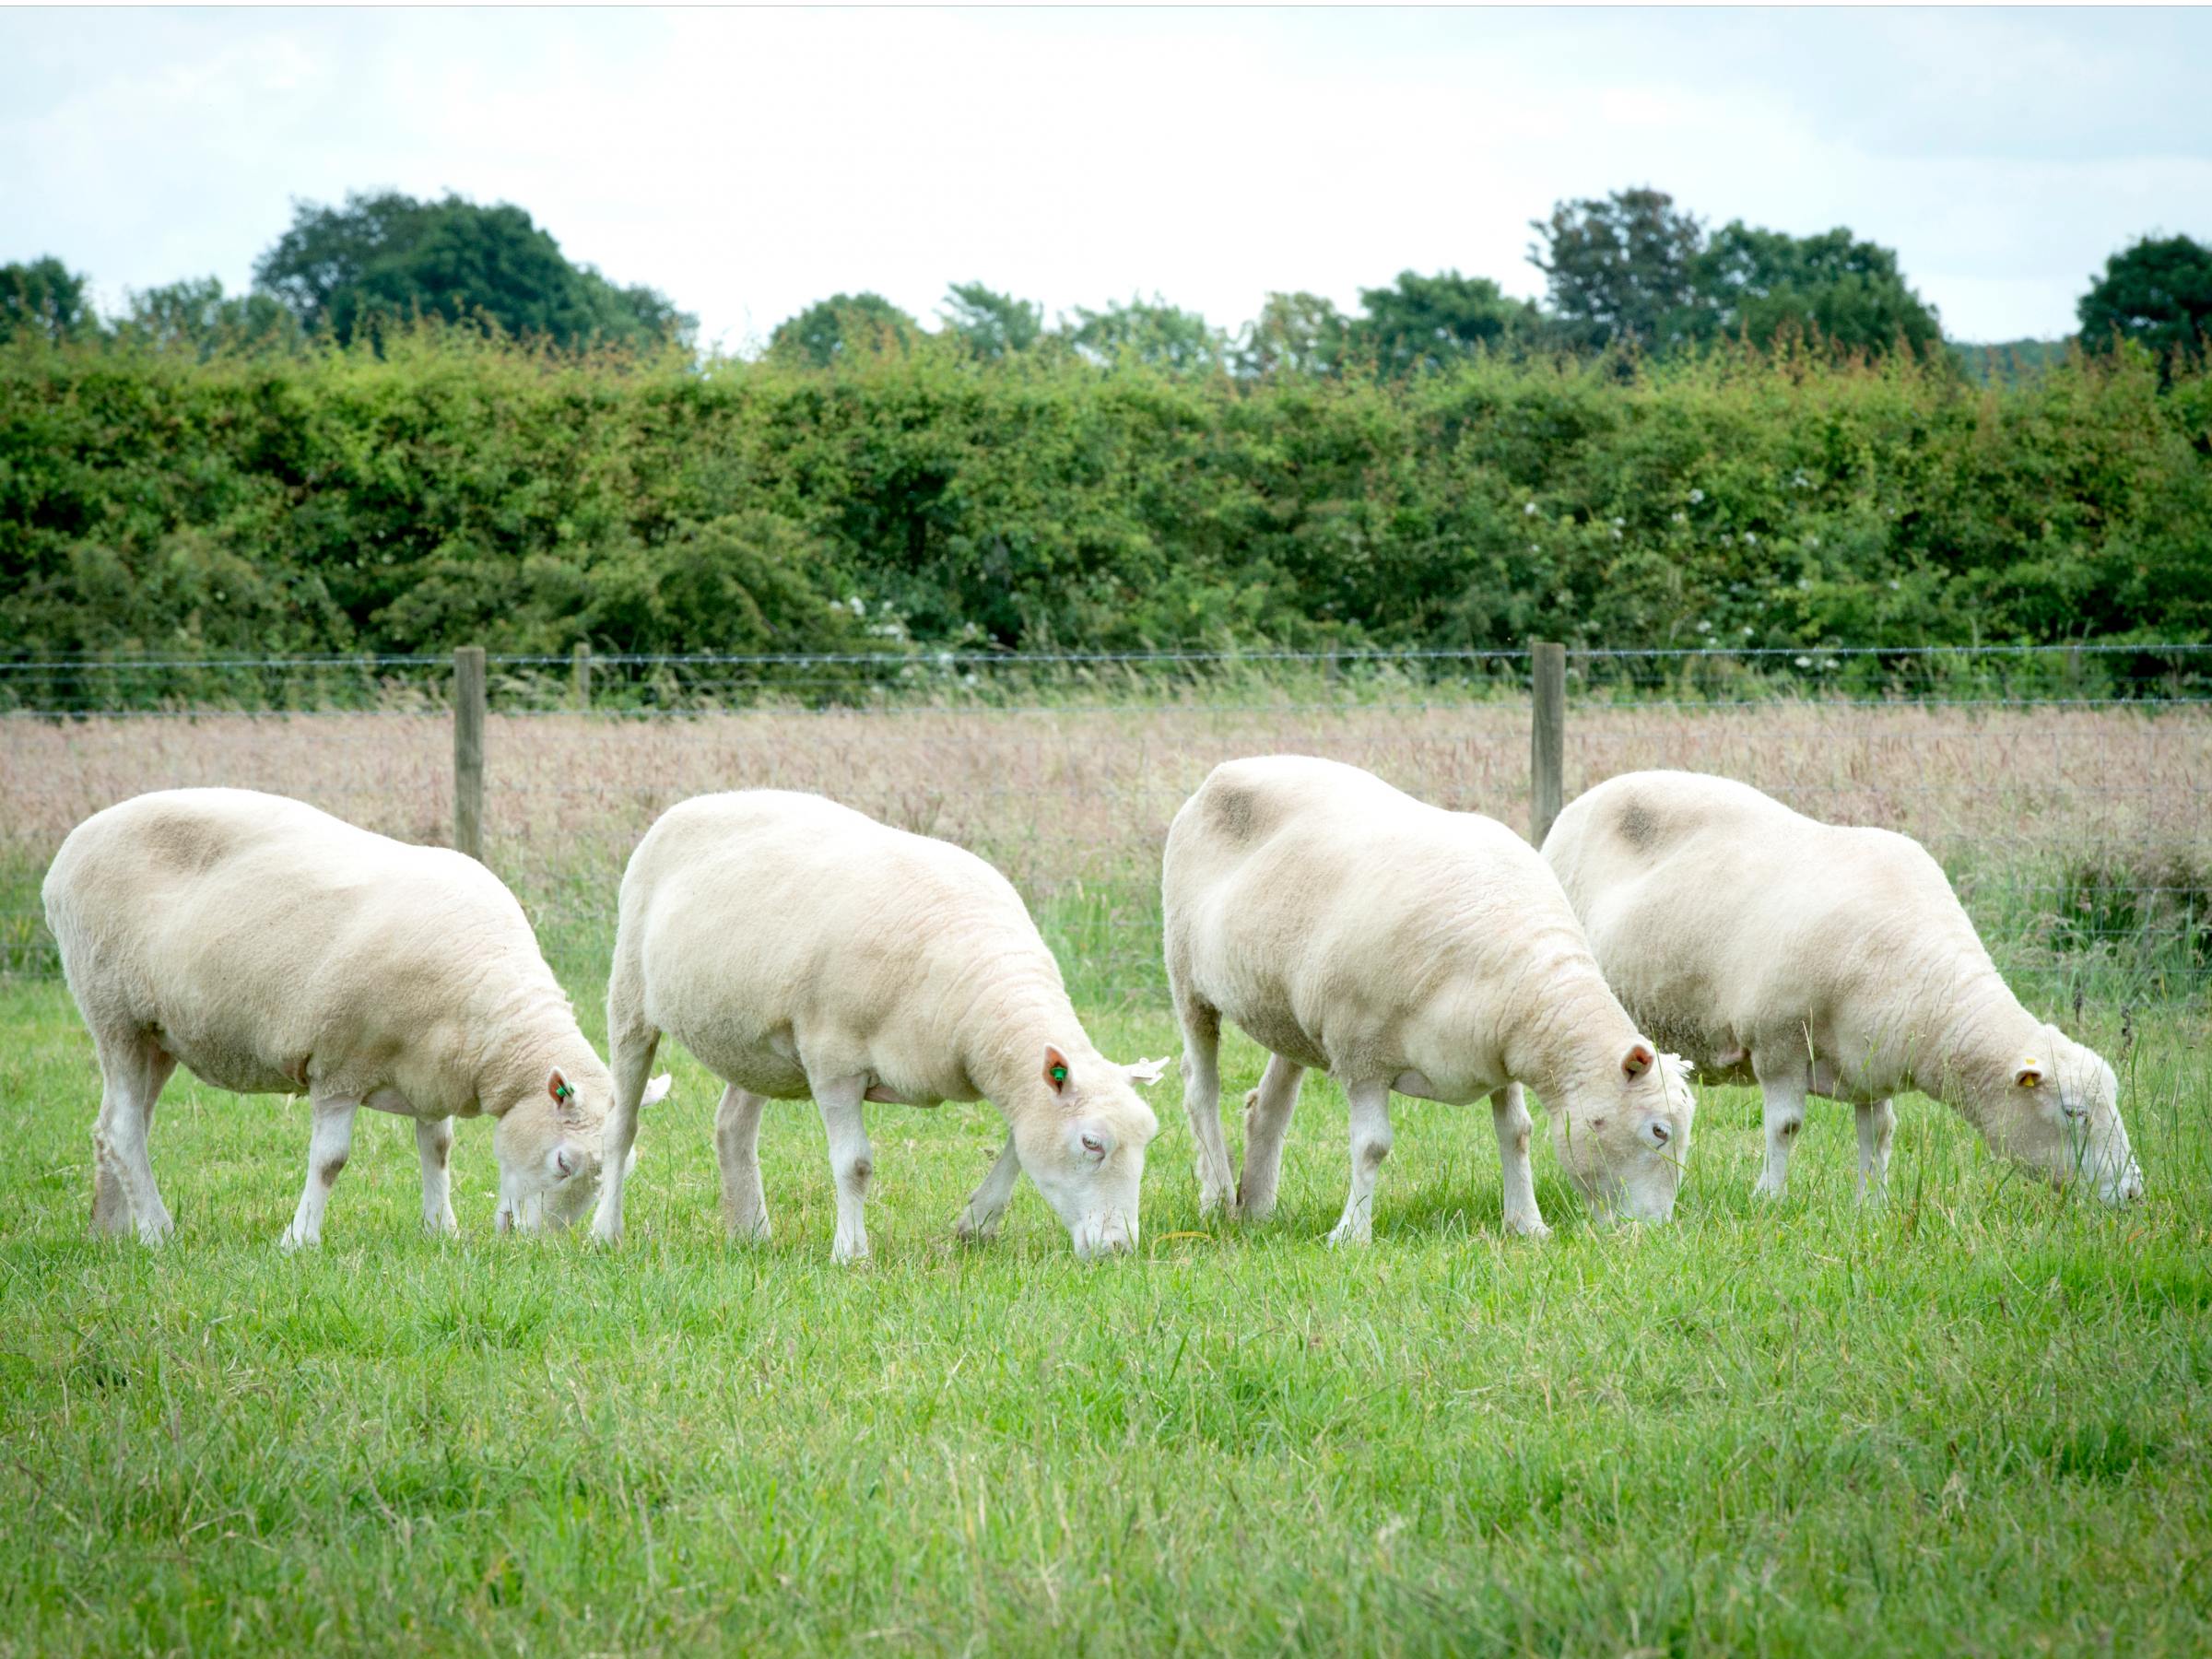 nottingham-dollies-grazing-cloned-sheep